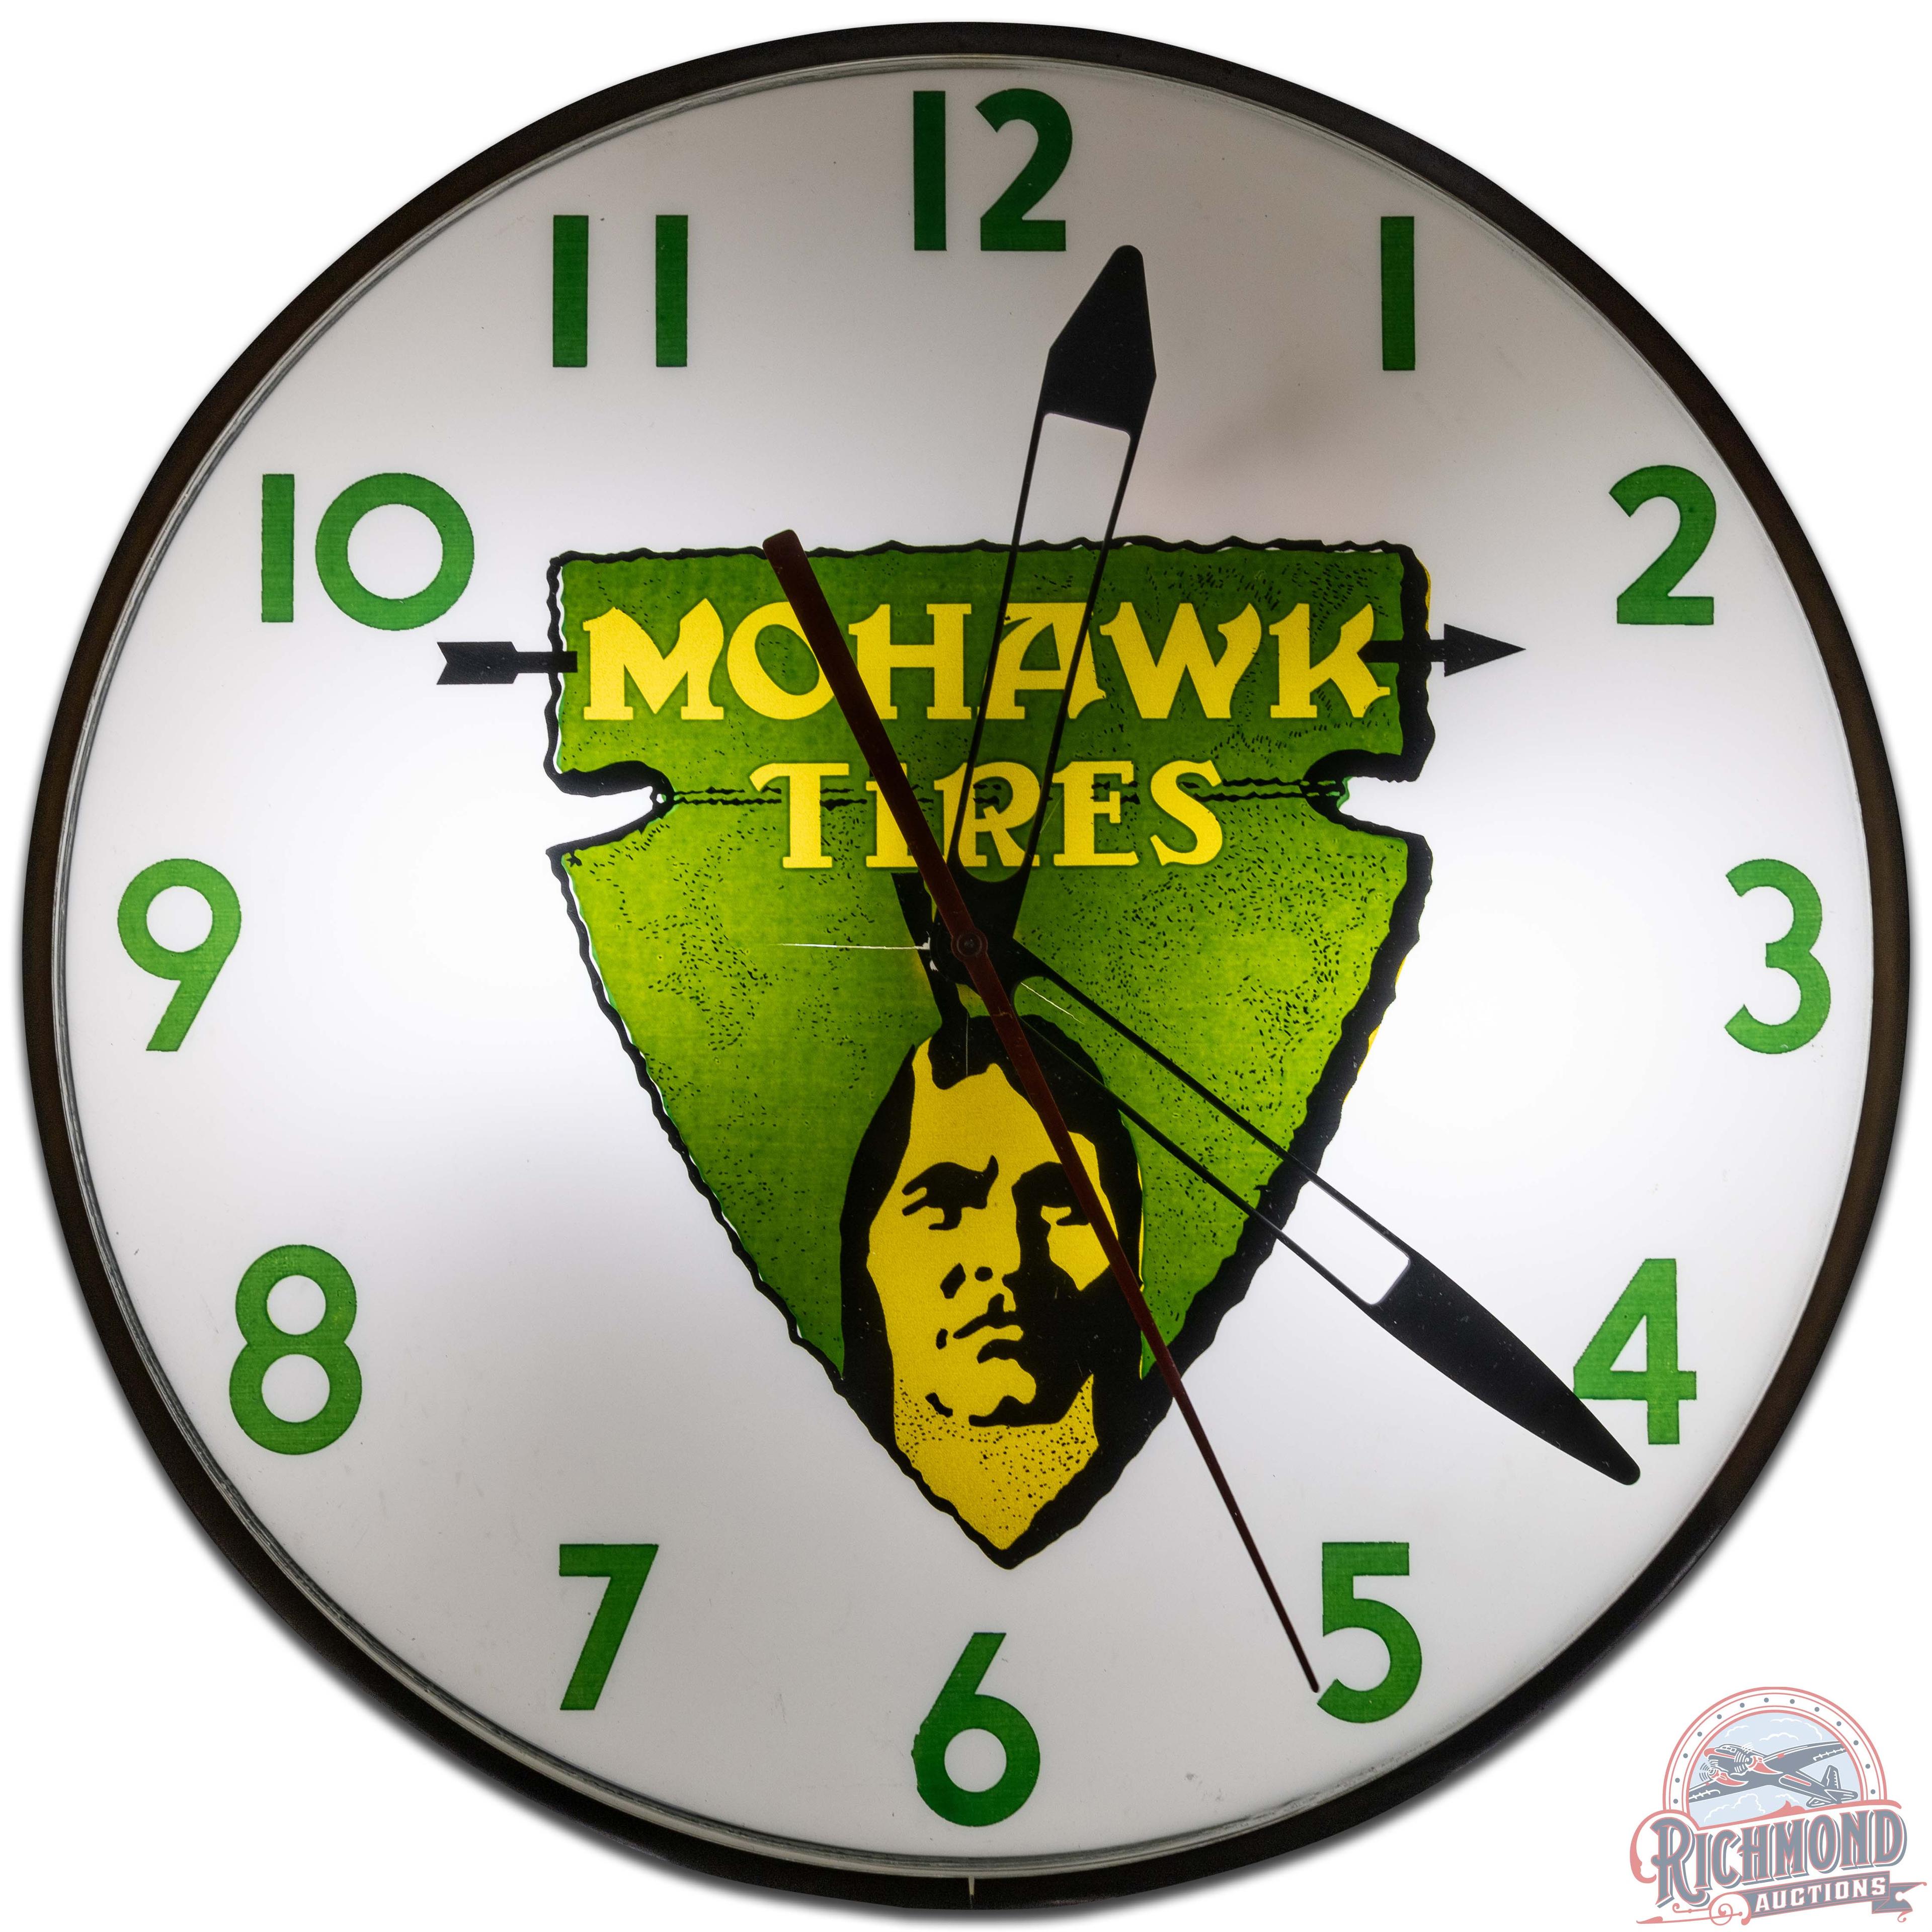 Mohawk Tires 15" Advertising Clock w/ Arrow Logo